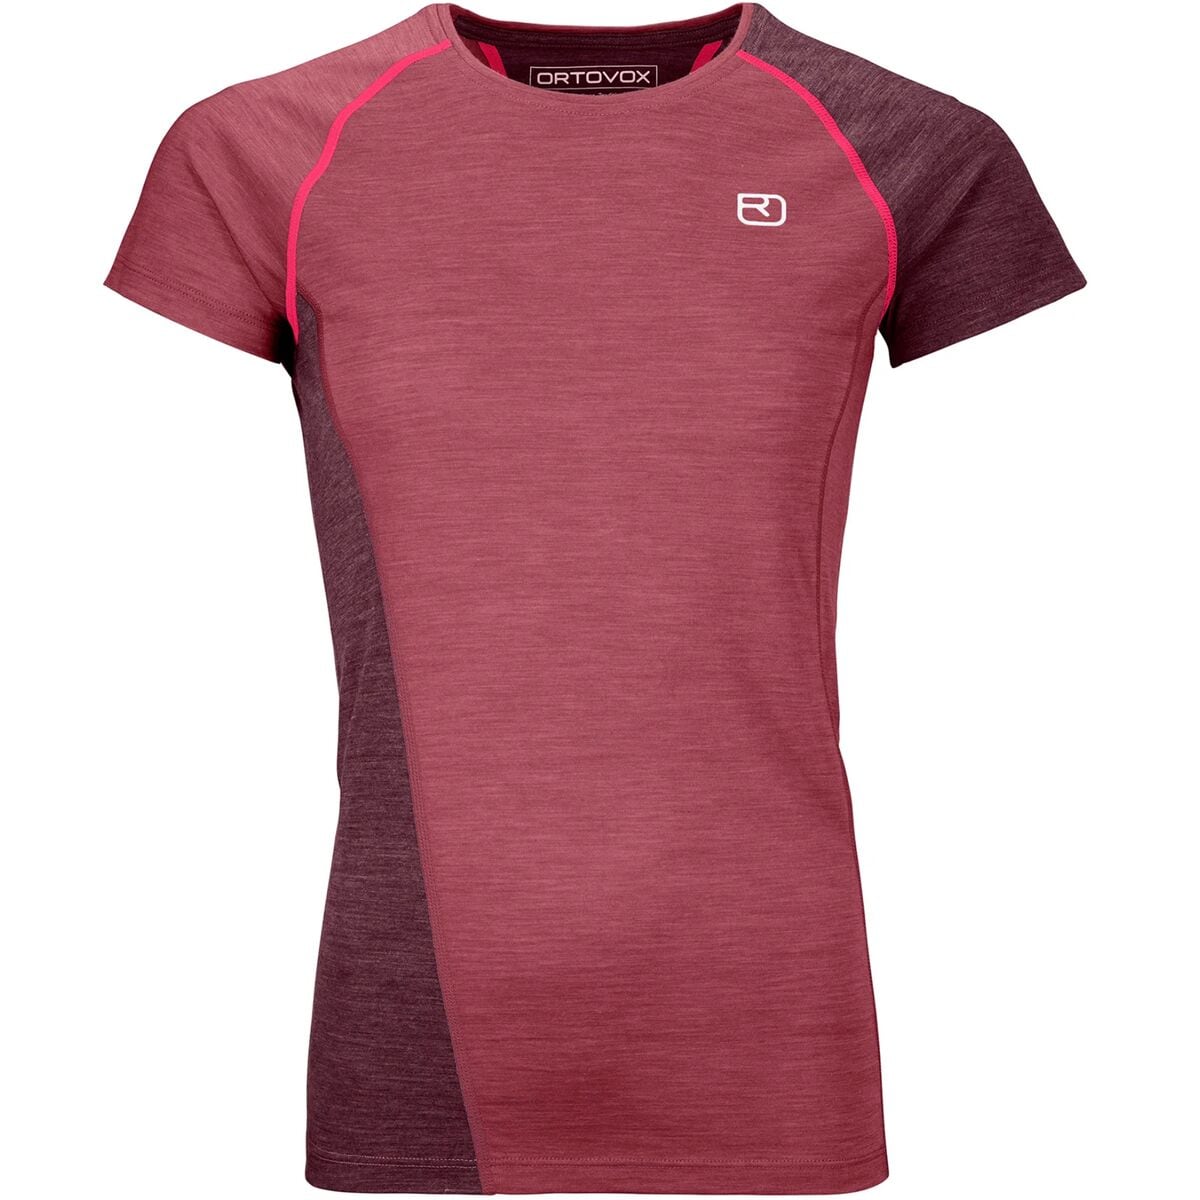 Ortovox 120 Cool TEC Fast Upward Short-Sleeve T-Shirt - Women's